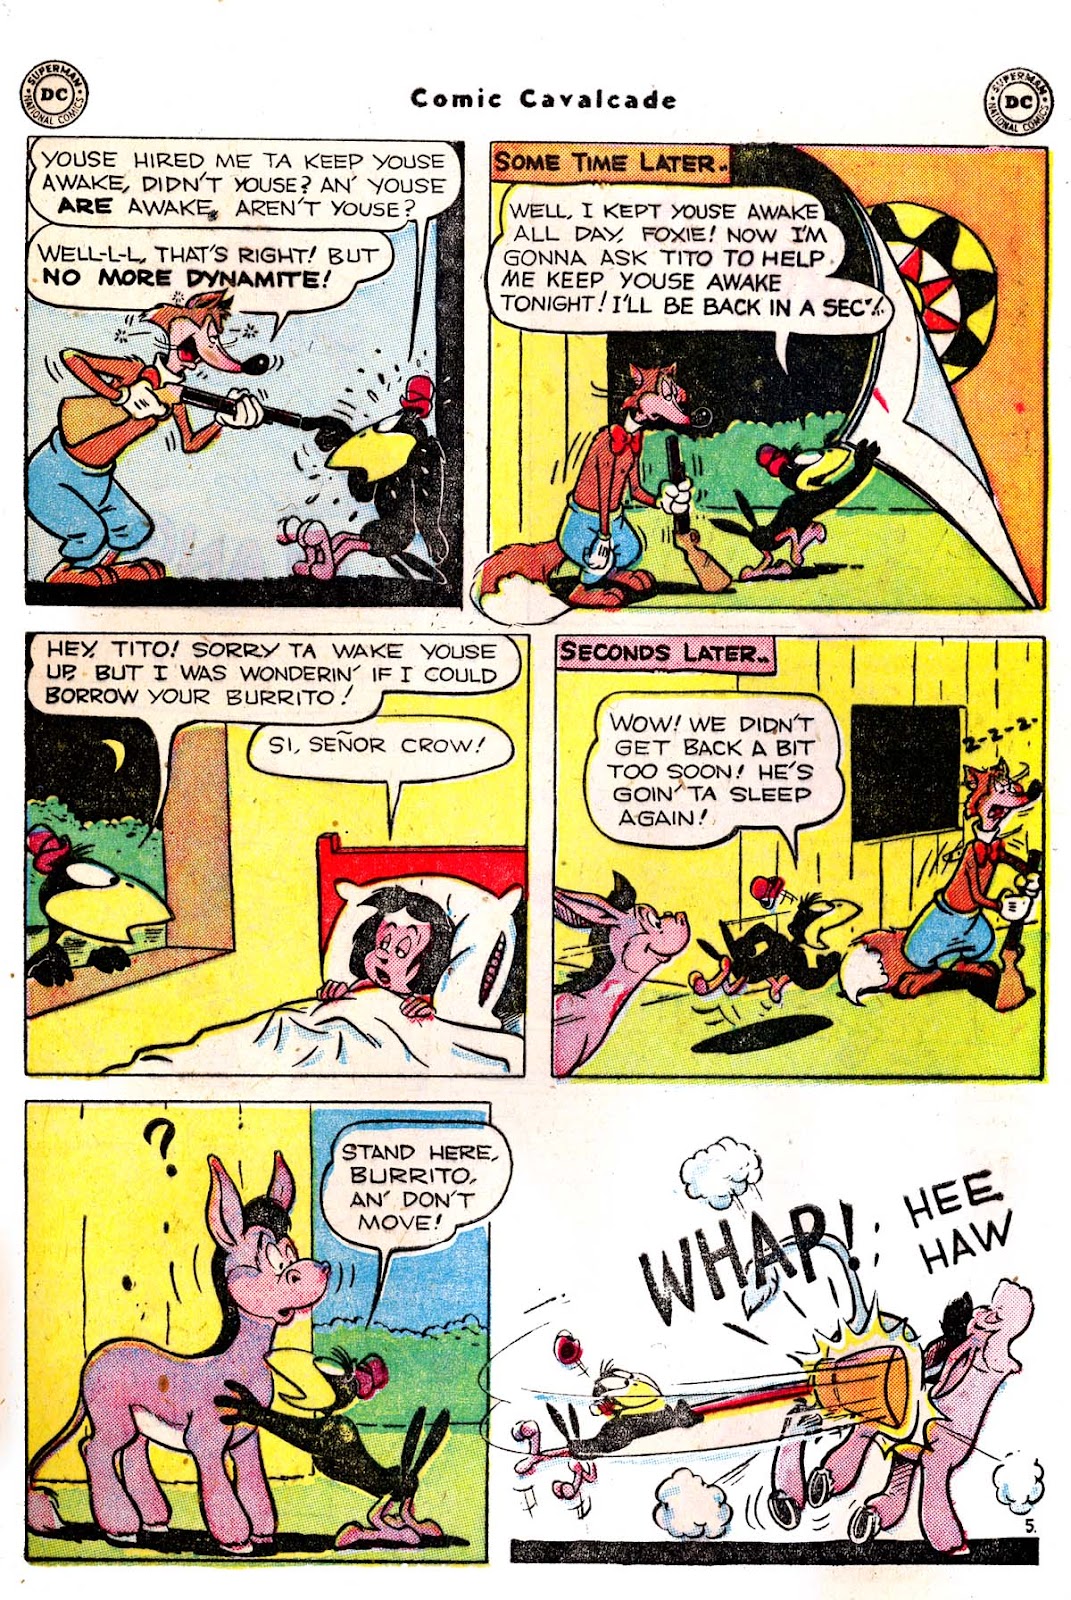 Comic Cavalcade issue 48 - Page 7